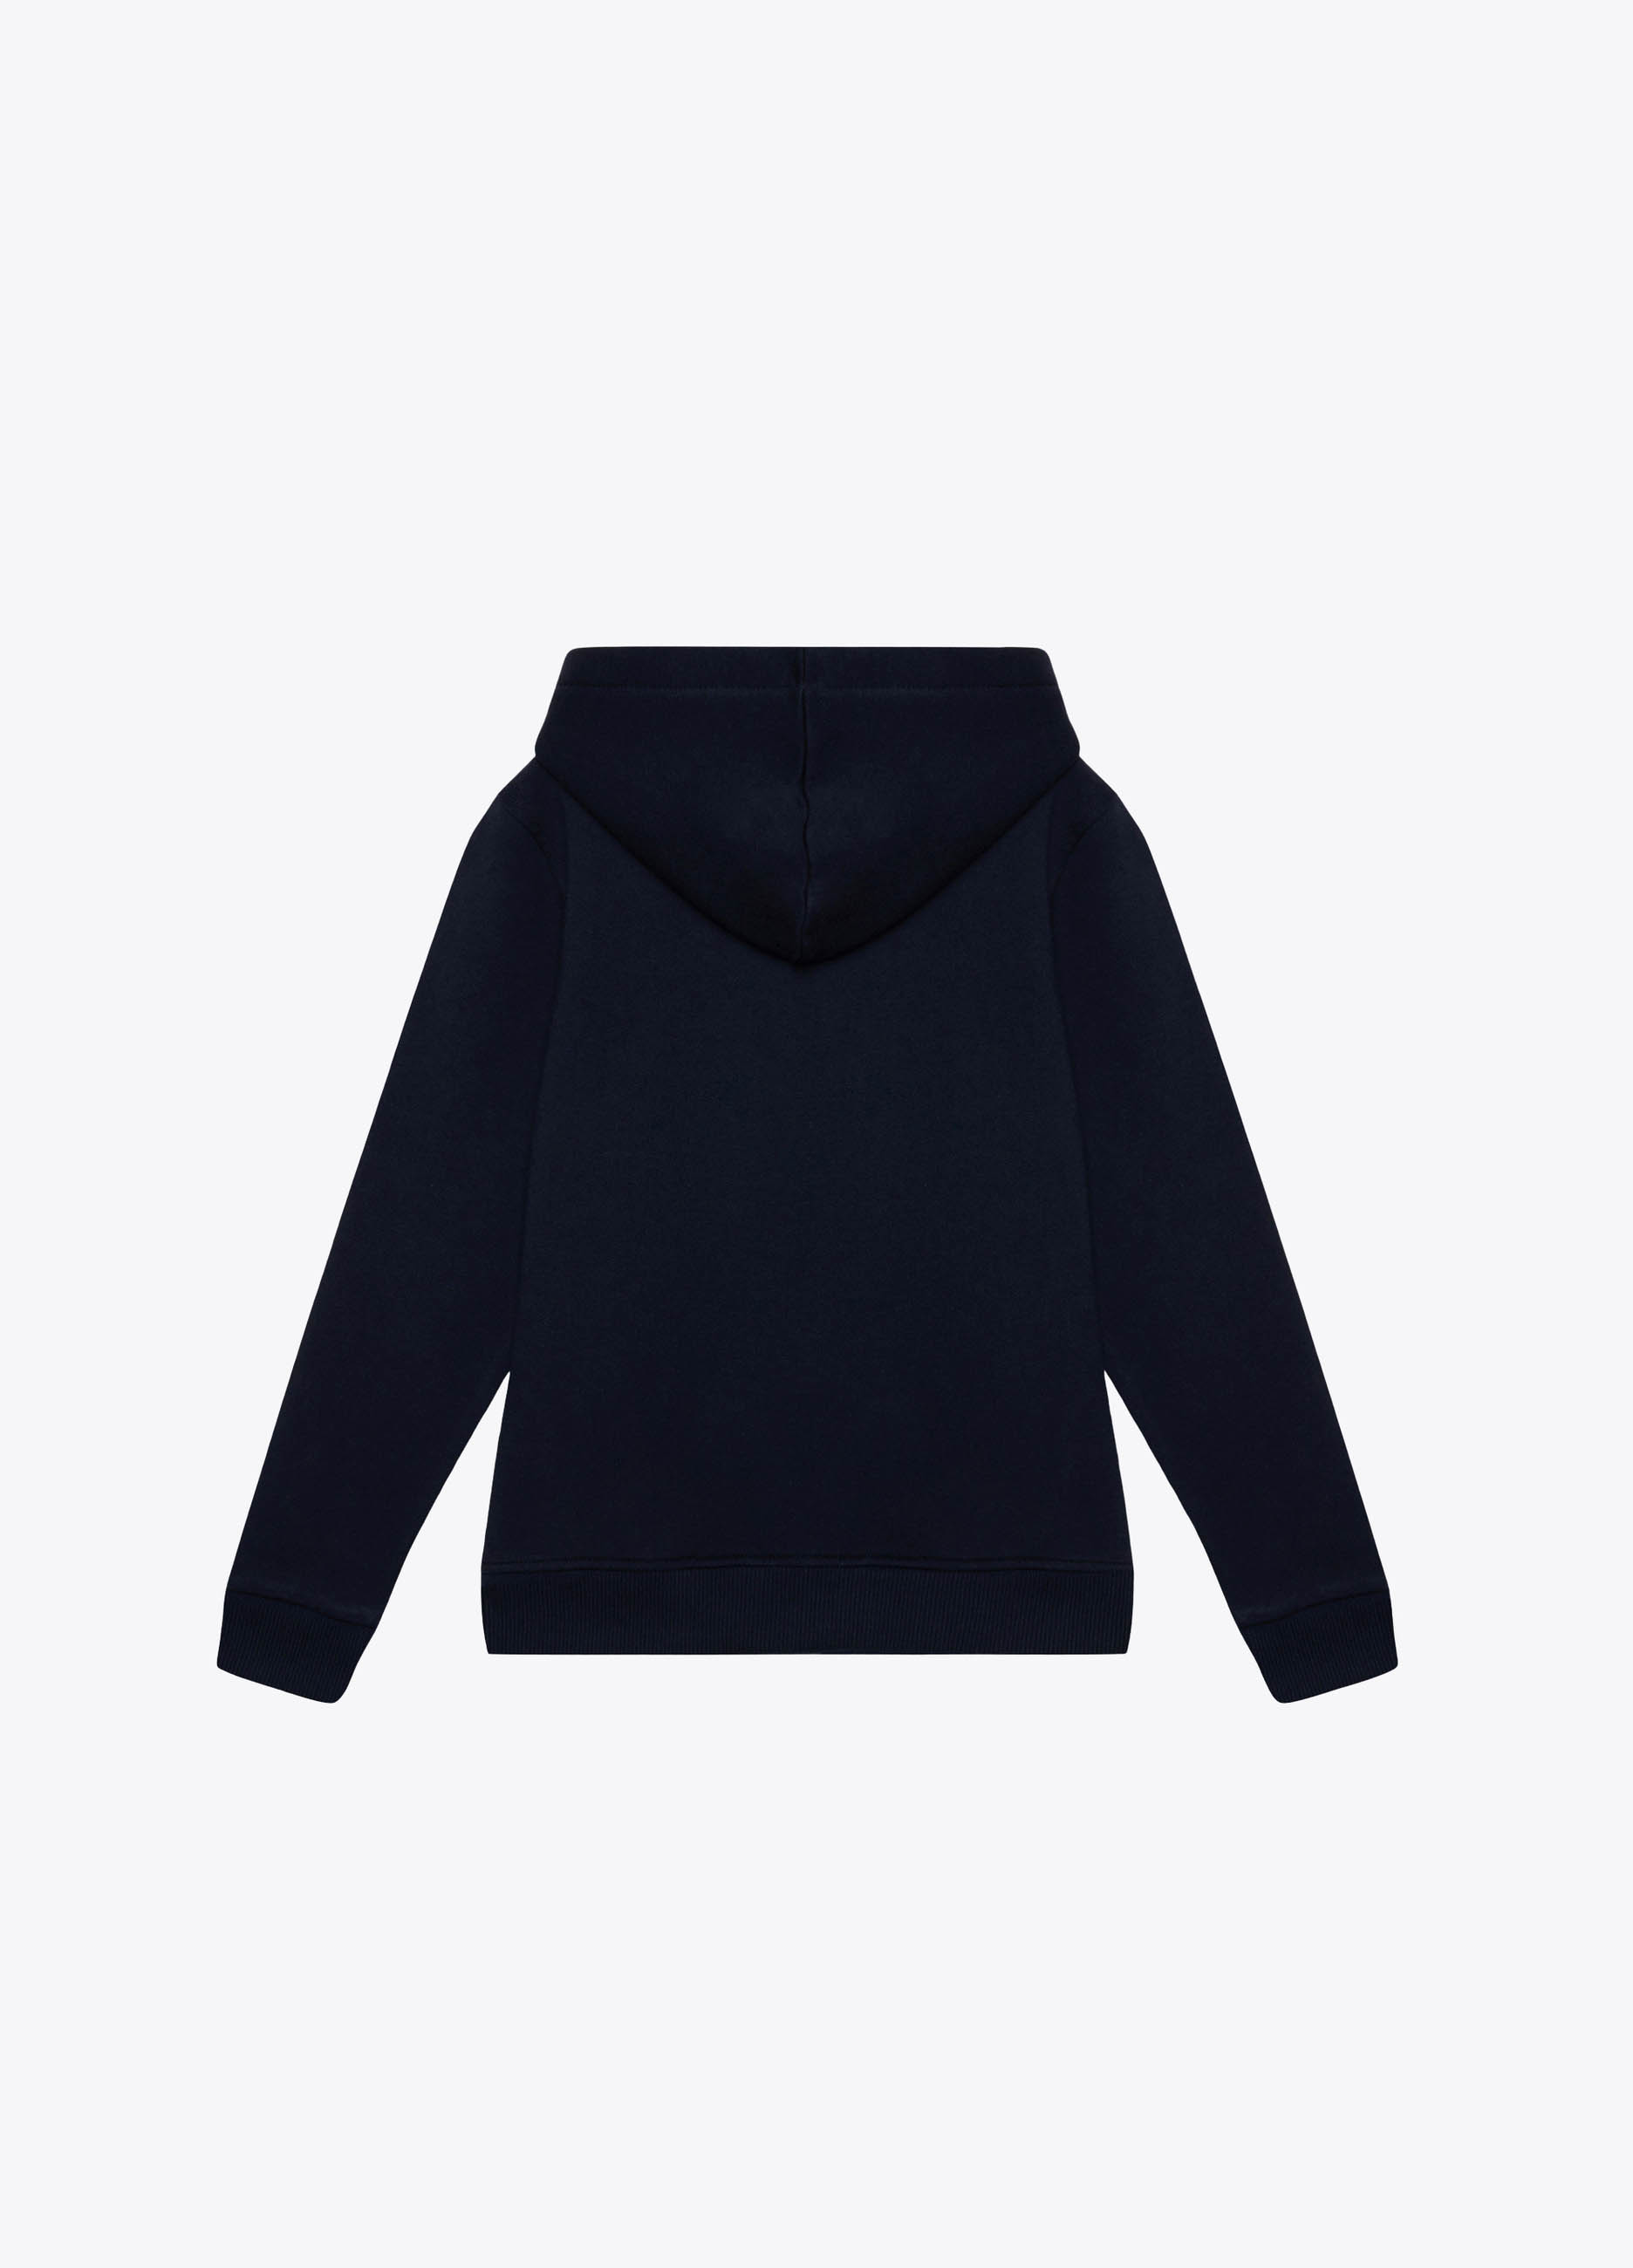 UNISEX - Heavy fleece sweatshirt with hoodie and zip.